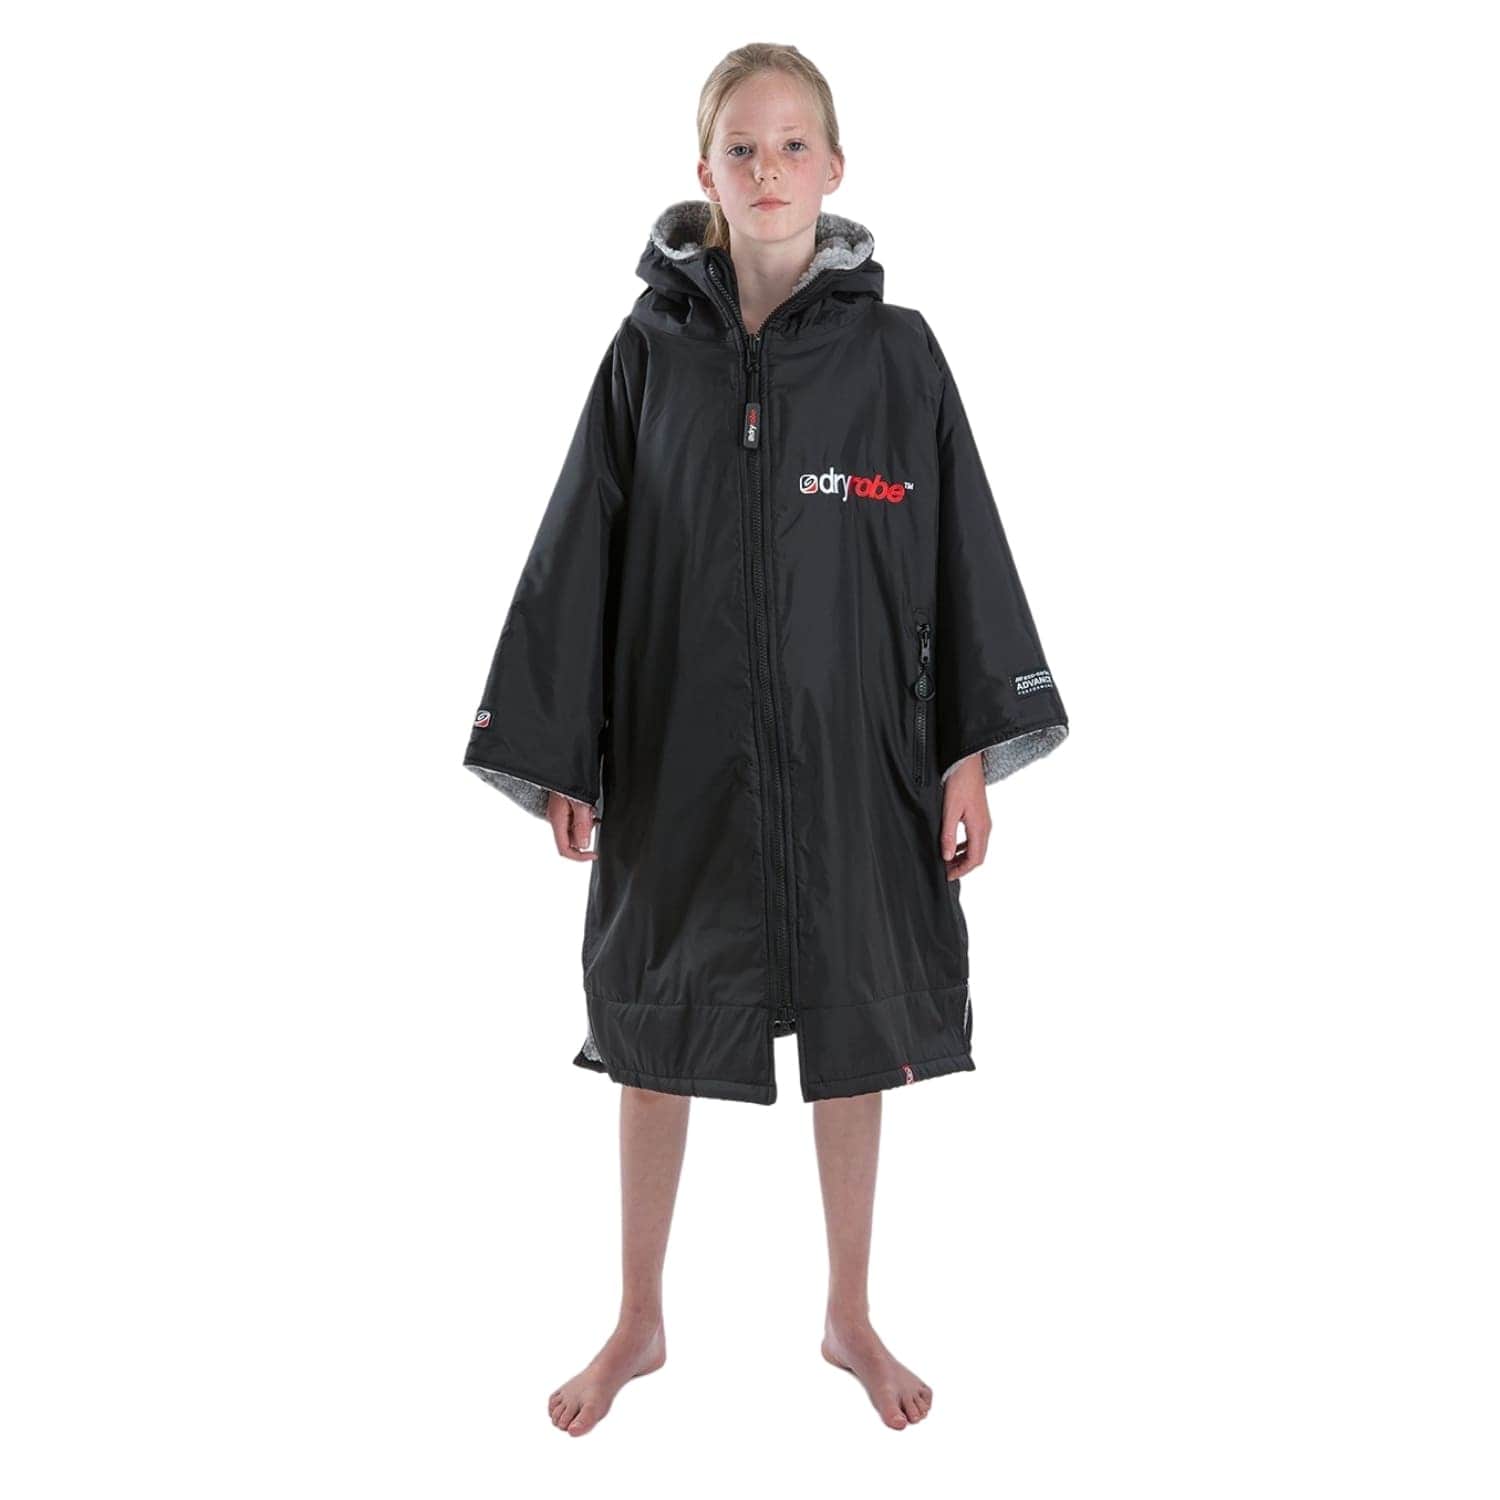 Dryrobe Kids Advance Short Sleeve Drying & Changing Robe Black Grey - Changing Robe Poncho Towel by Dryrobe 10-14 Years